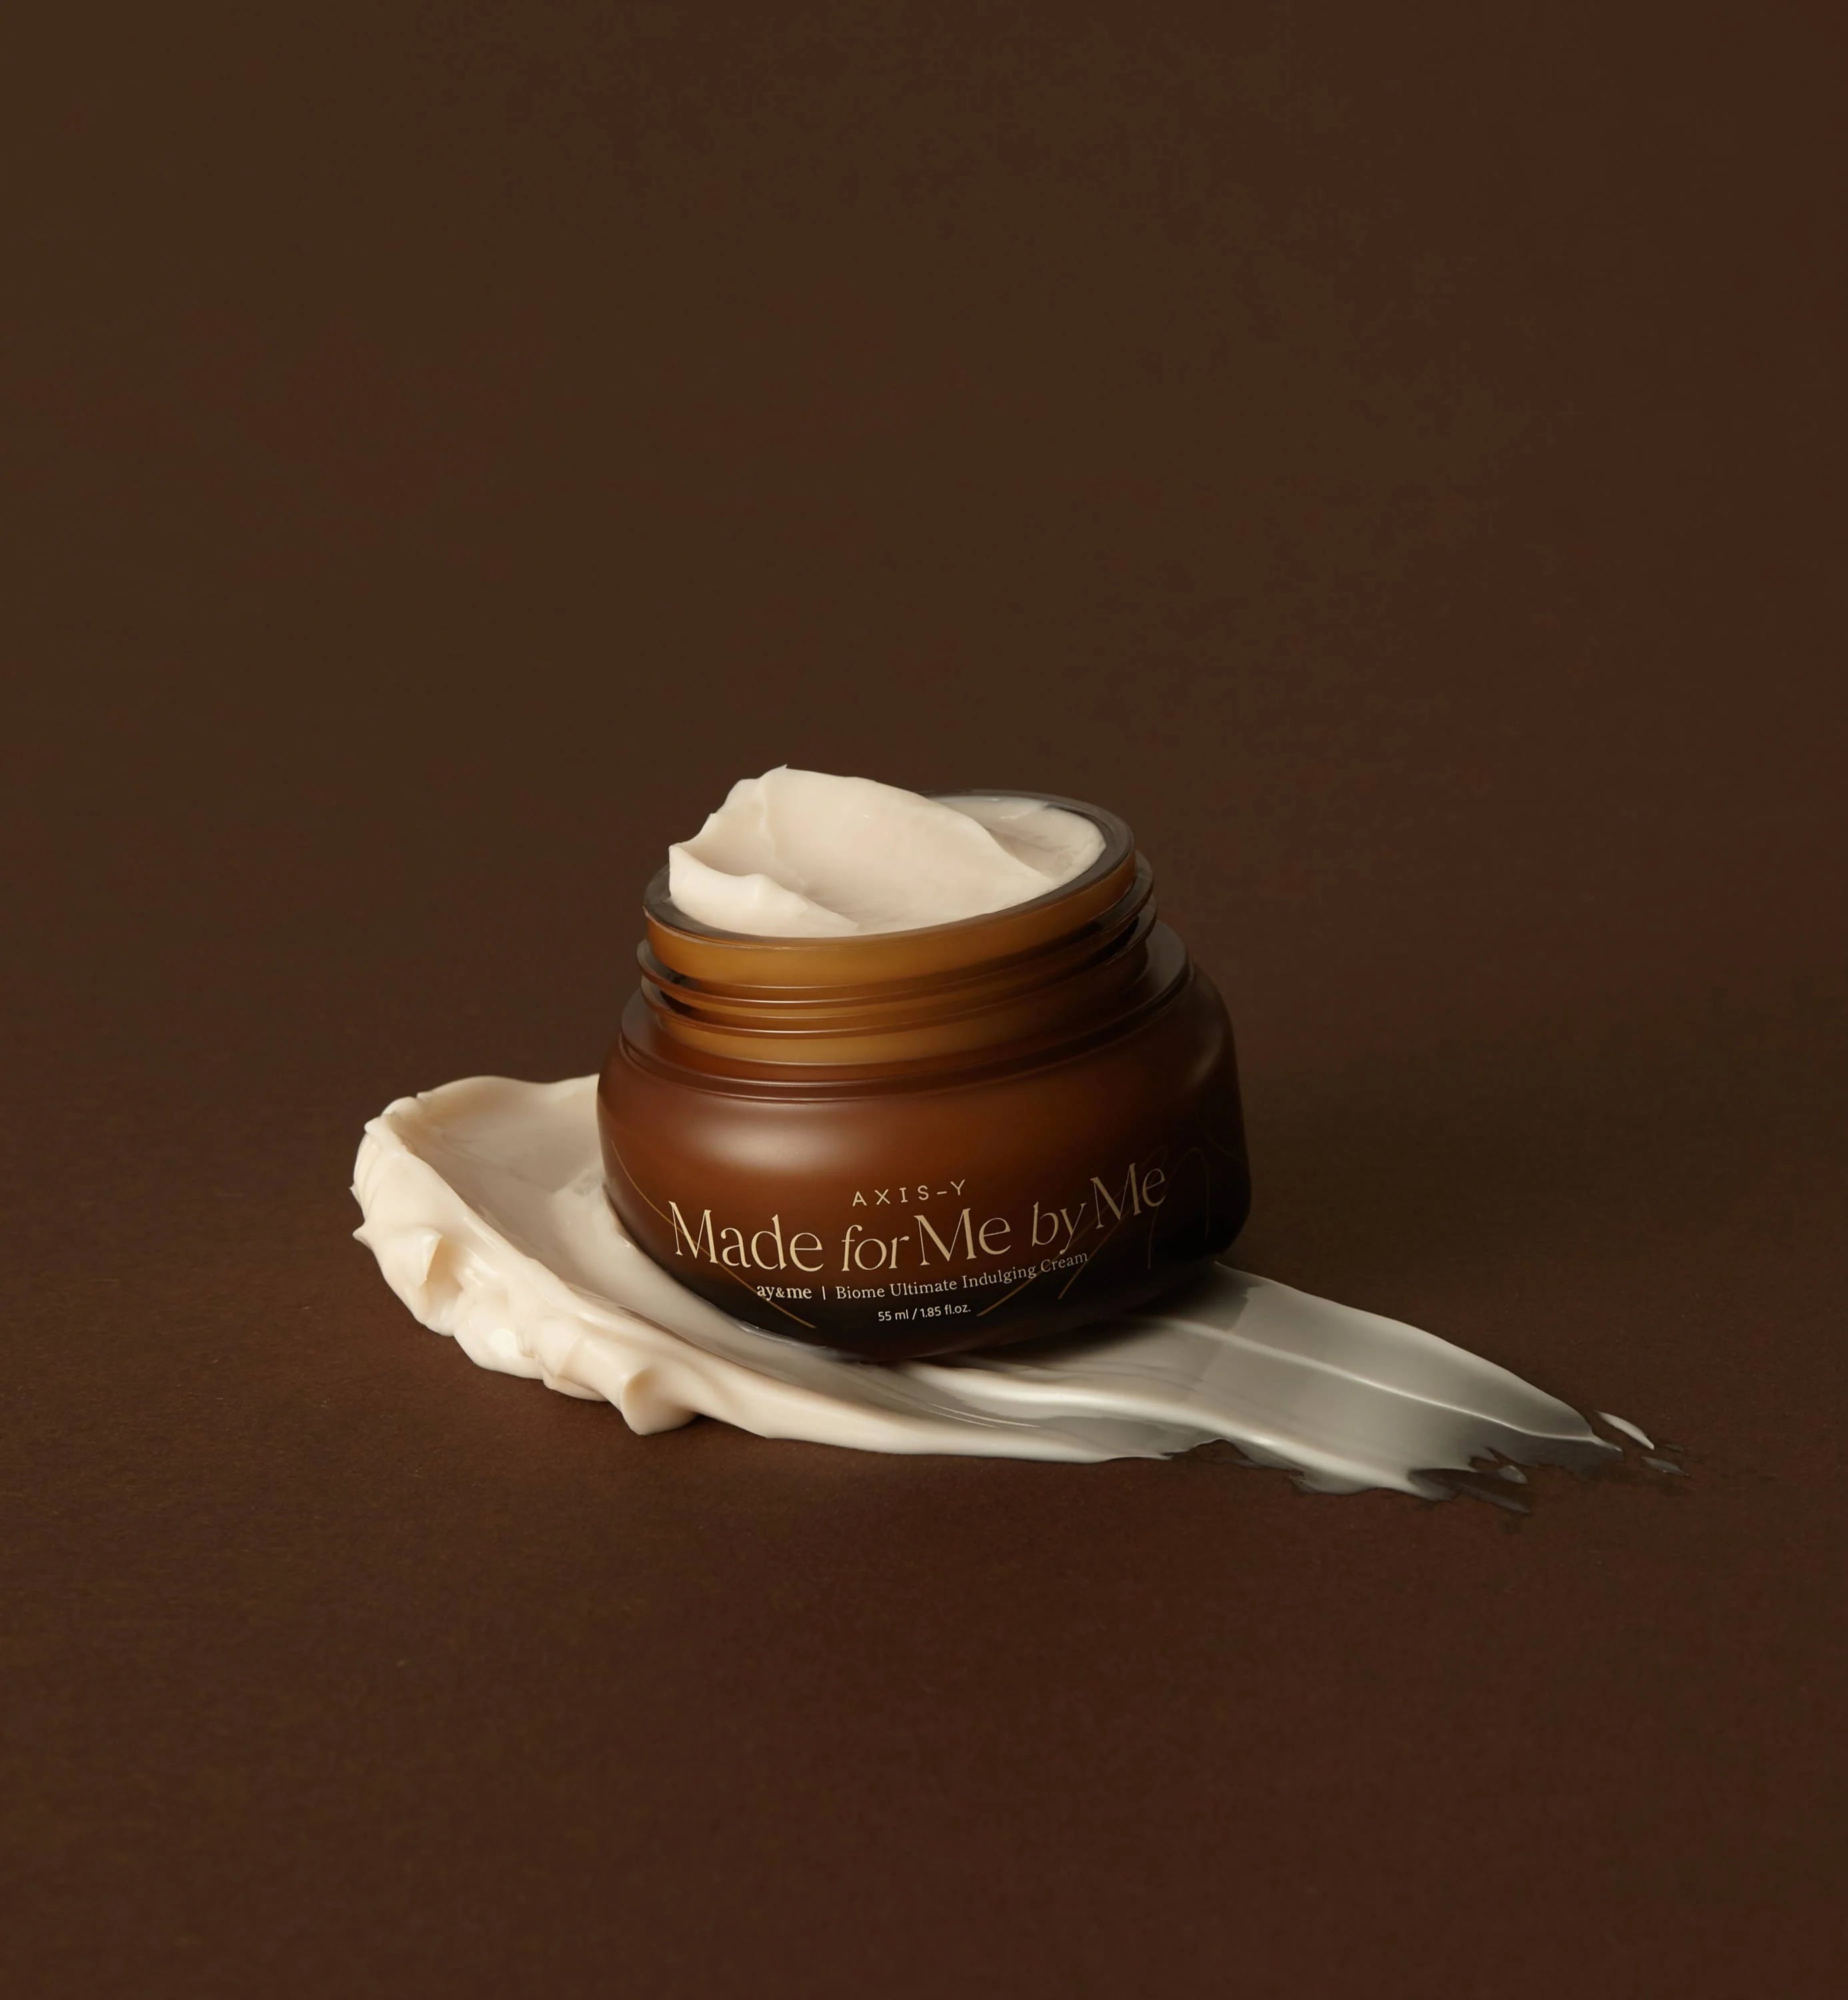 AXIS-Y - Biome Ultimate Indulging Cream 55ml- كريم الاشراقة من اكسس واي 55مل